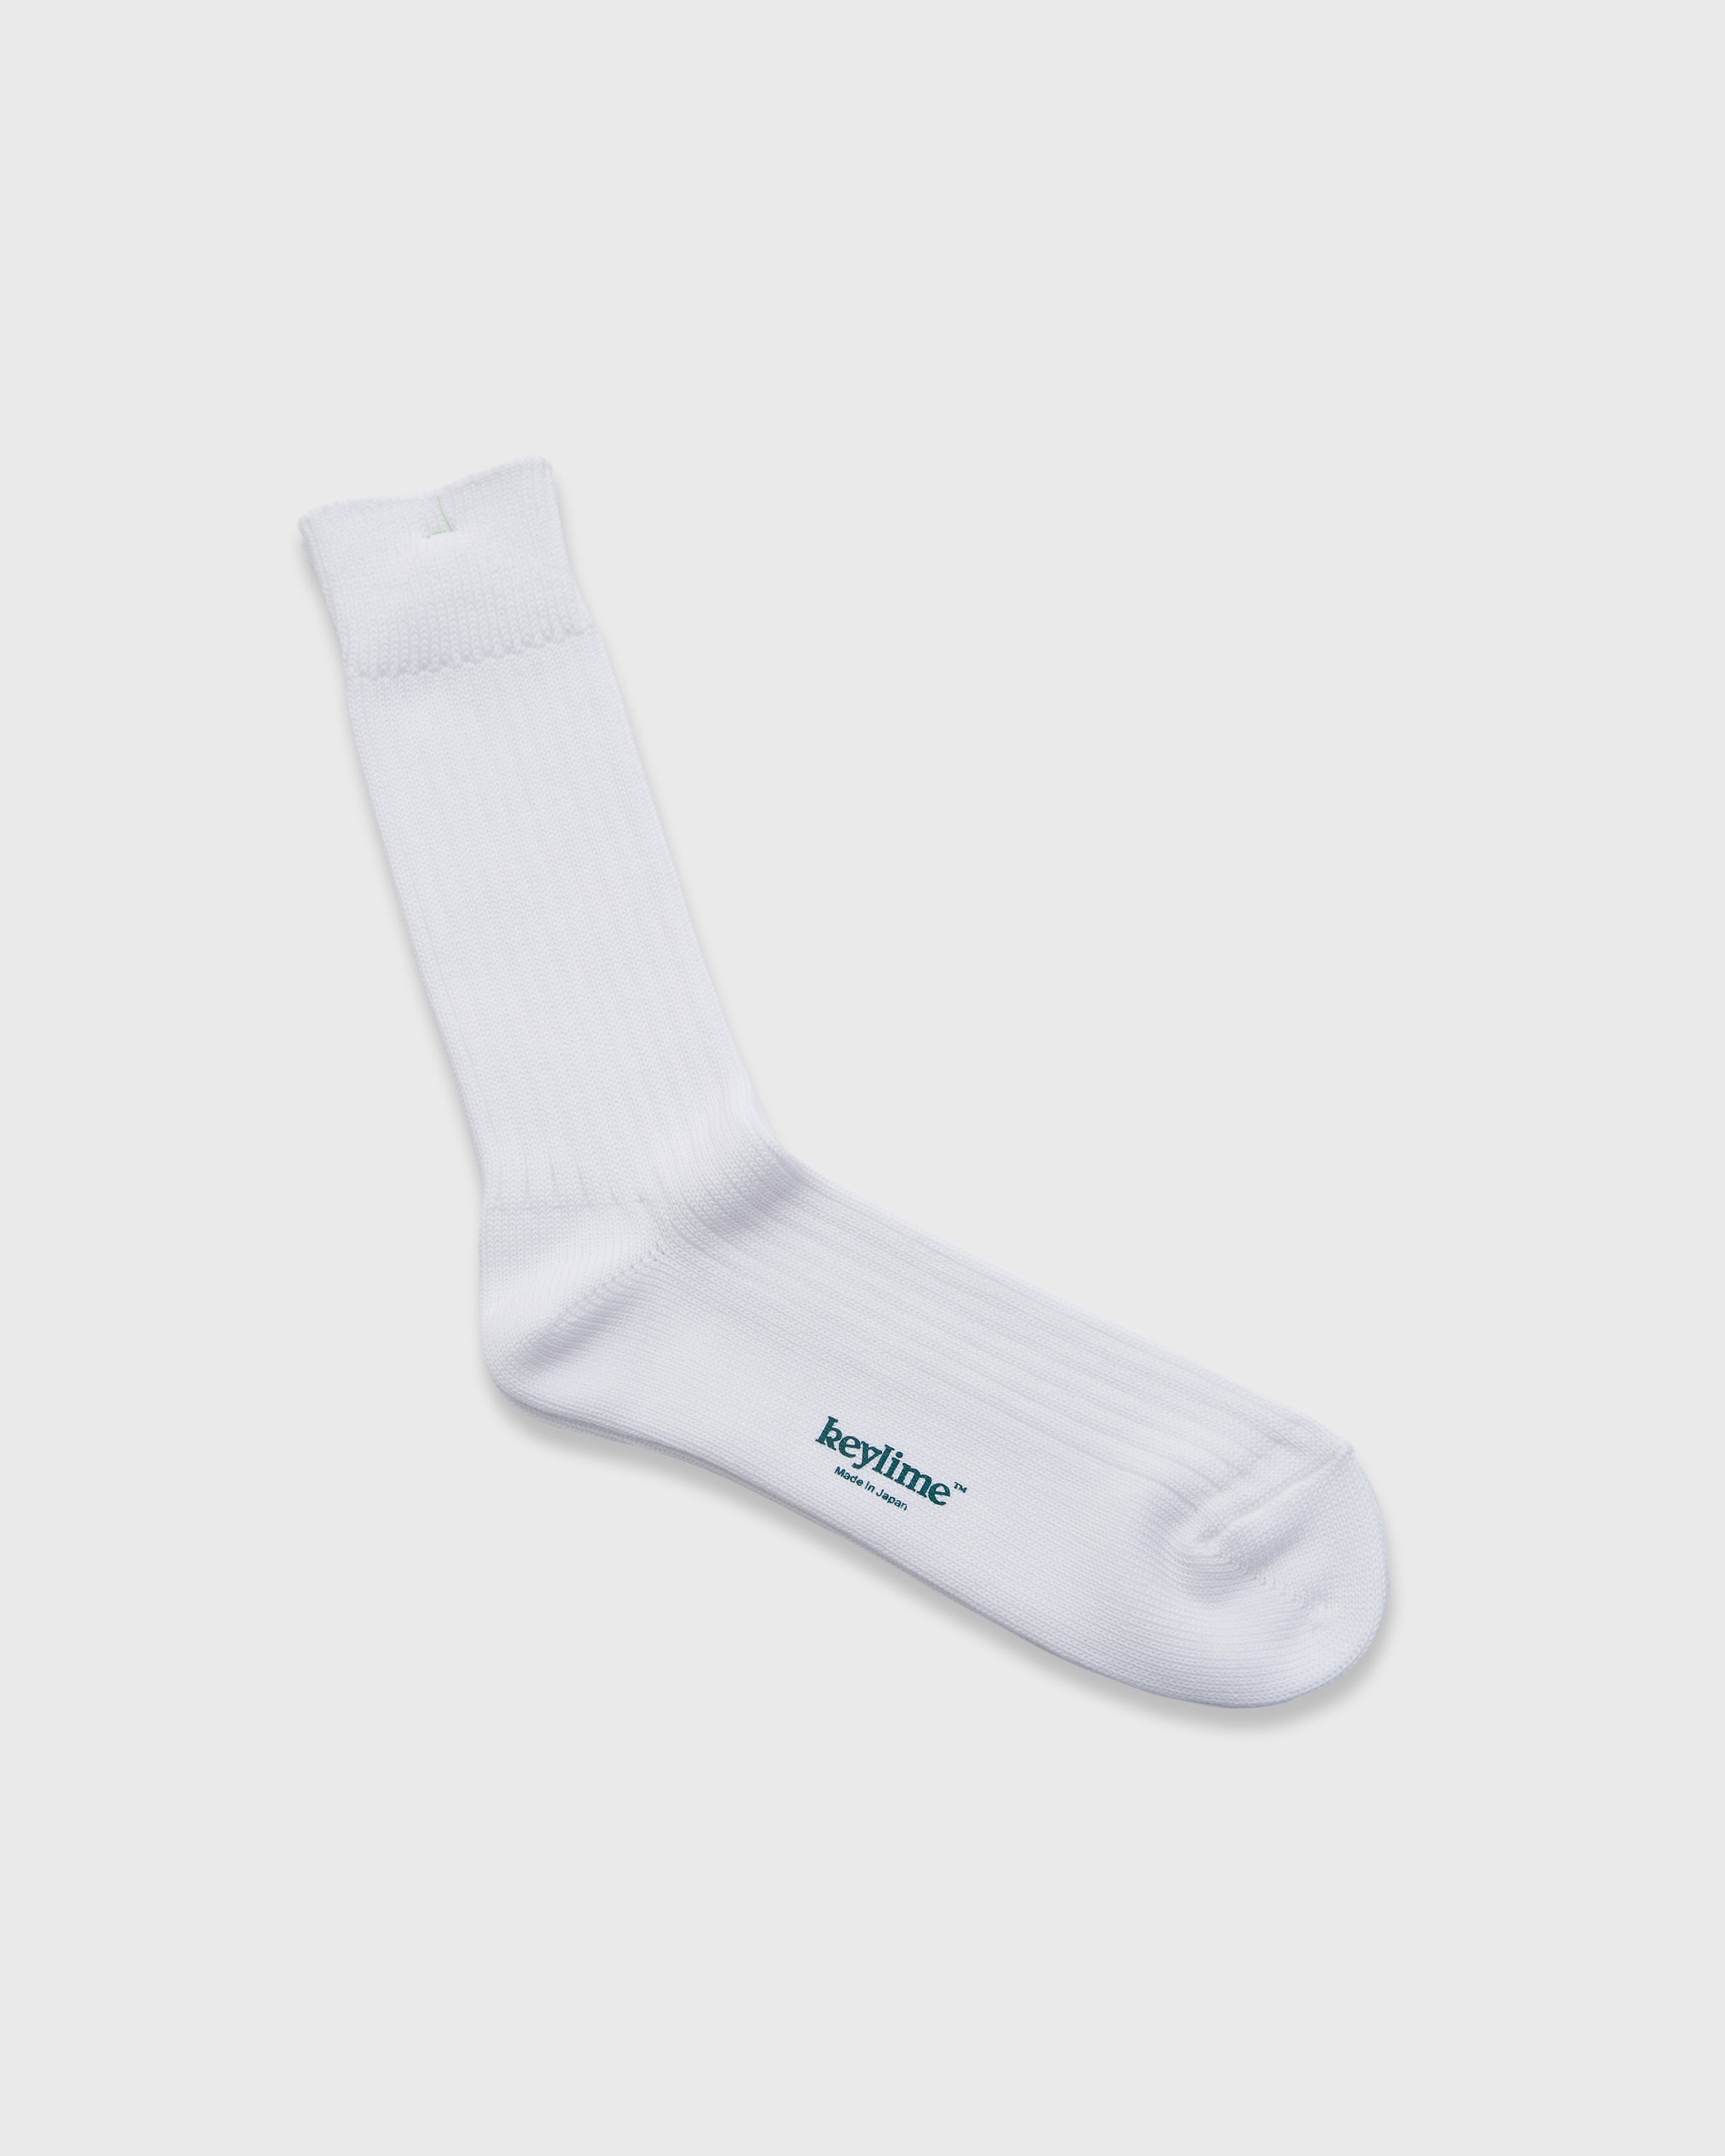 keylime Cotton Rib Socks, White